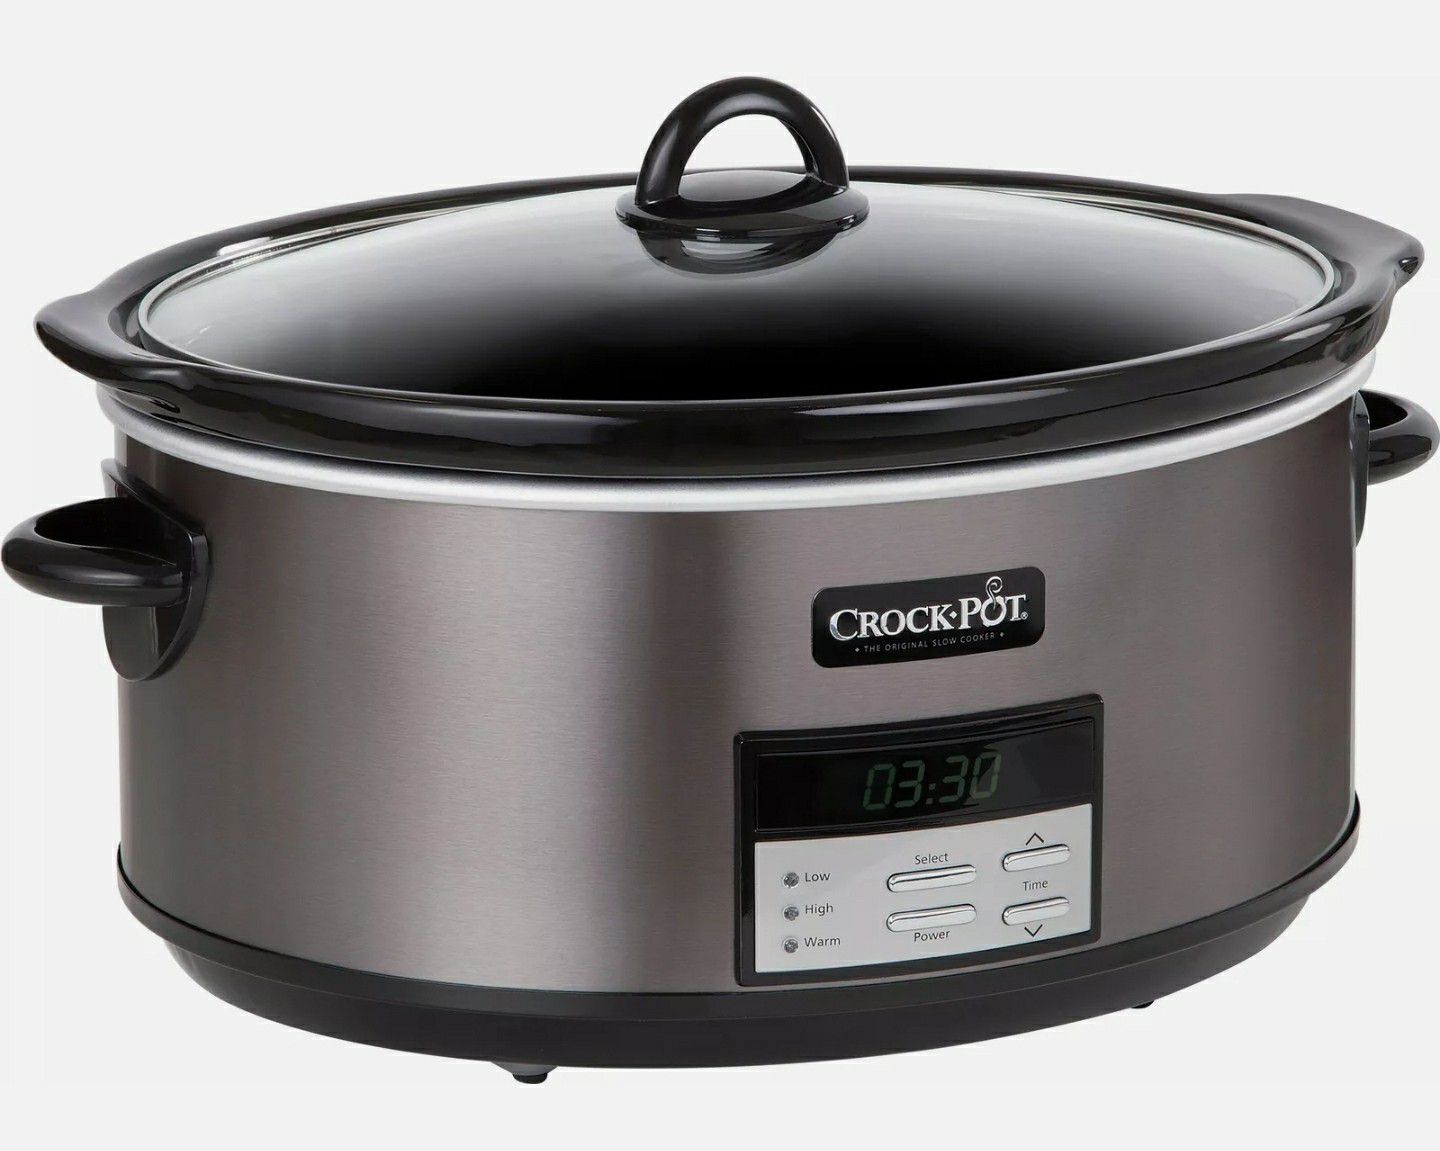 Crock-Pot - 8-Quart Slow Cooker - Black Stainless